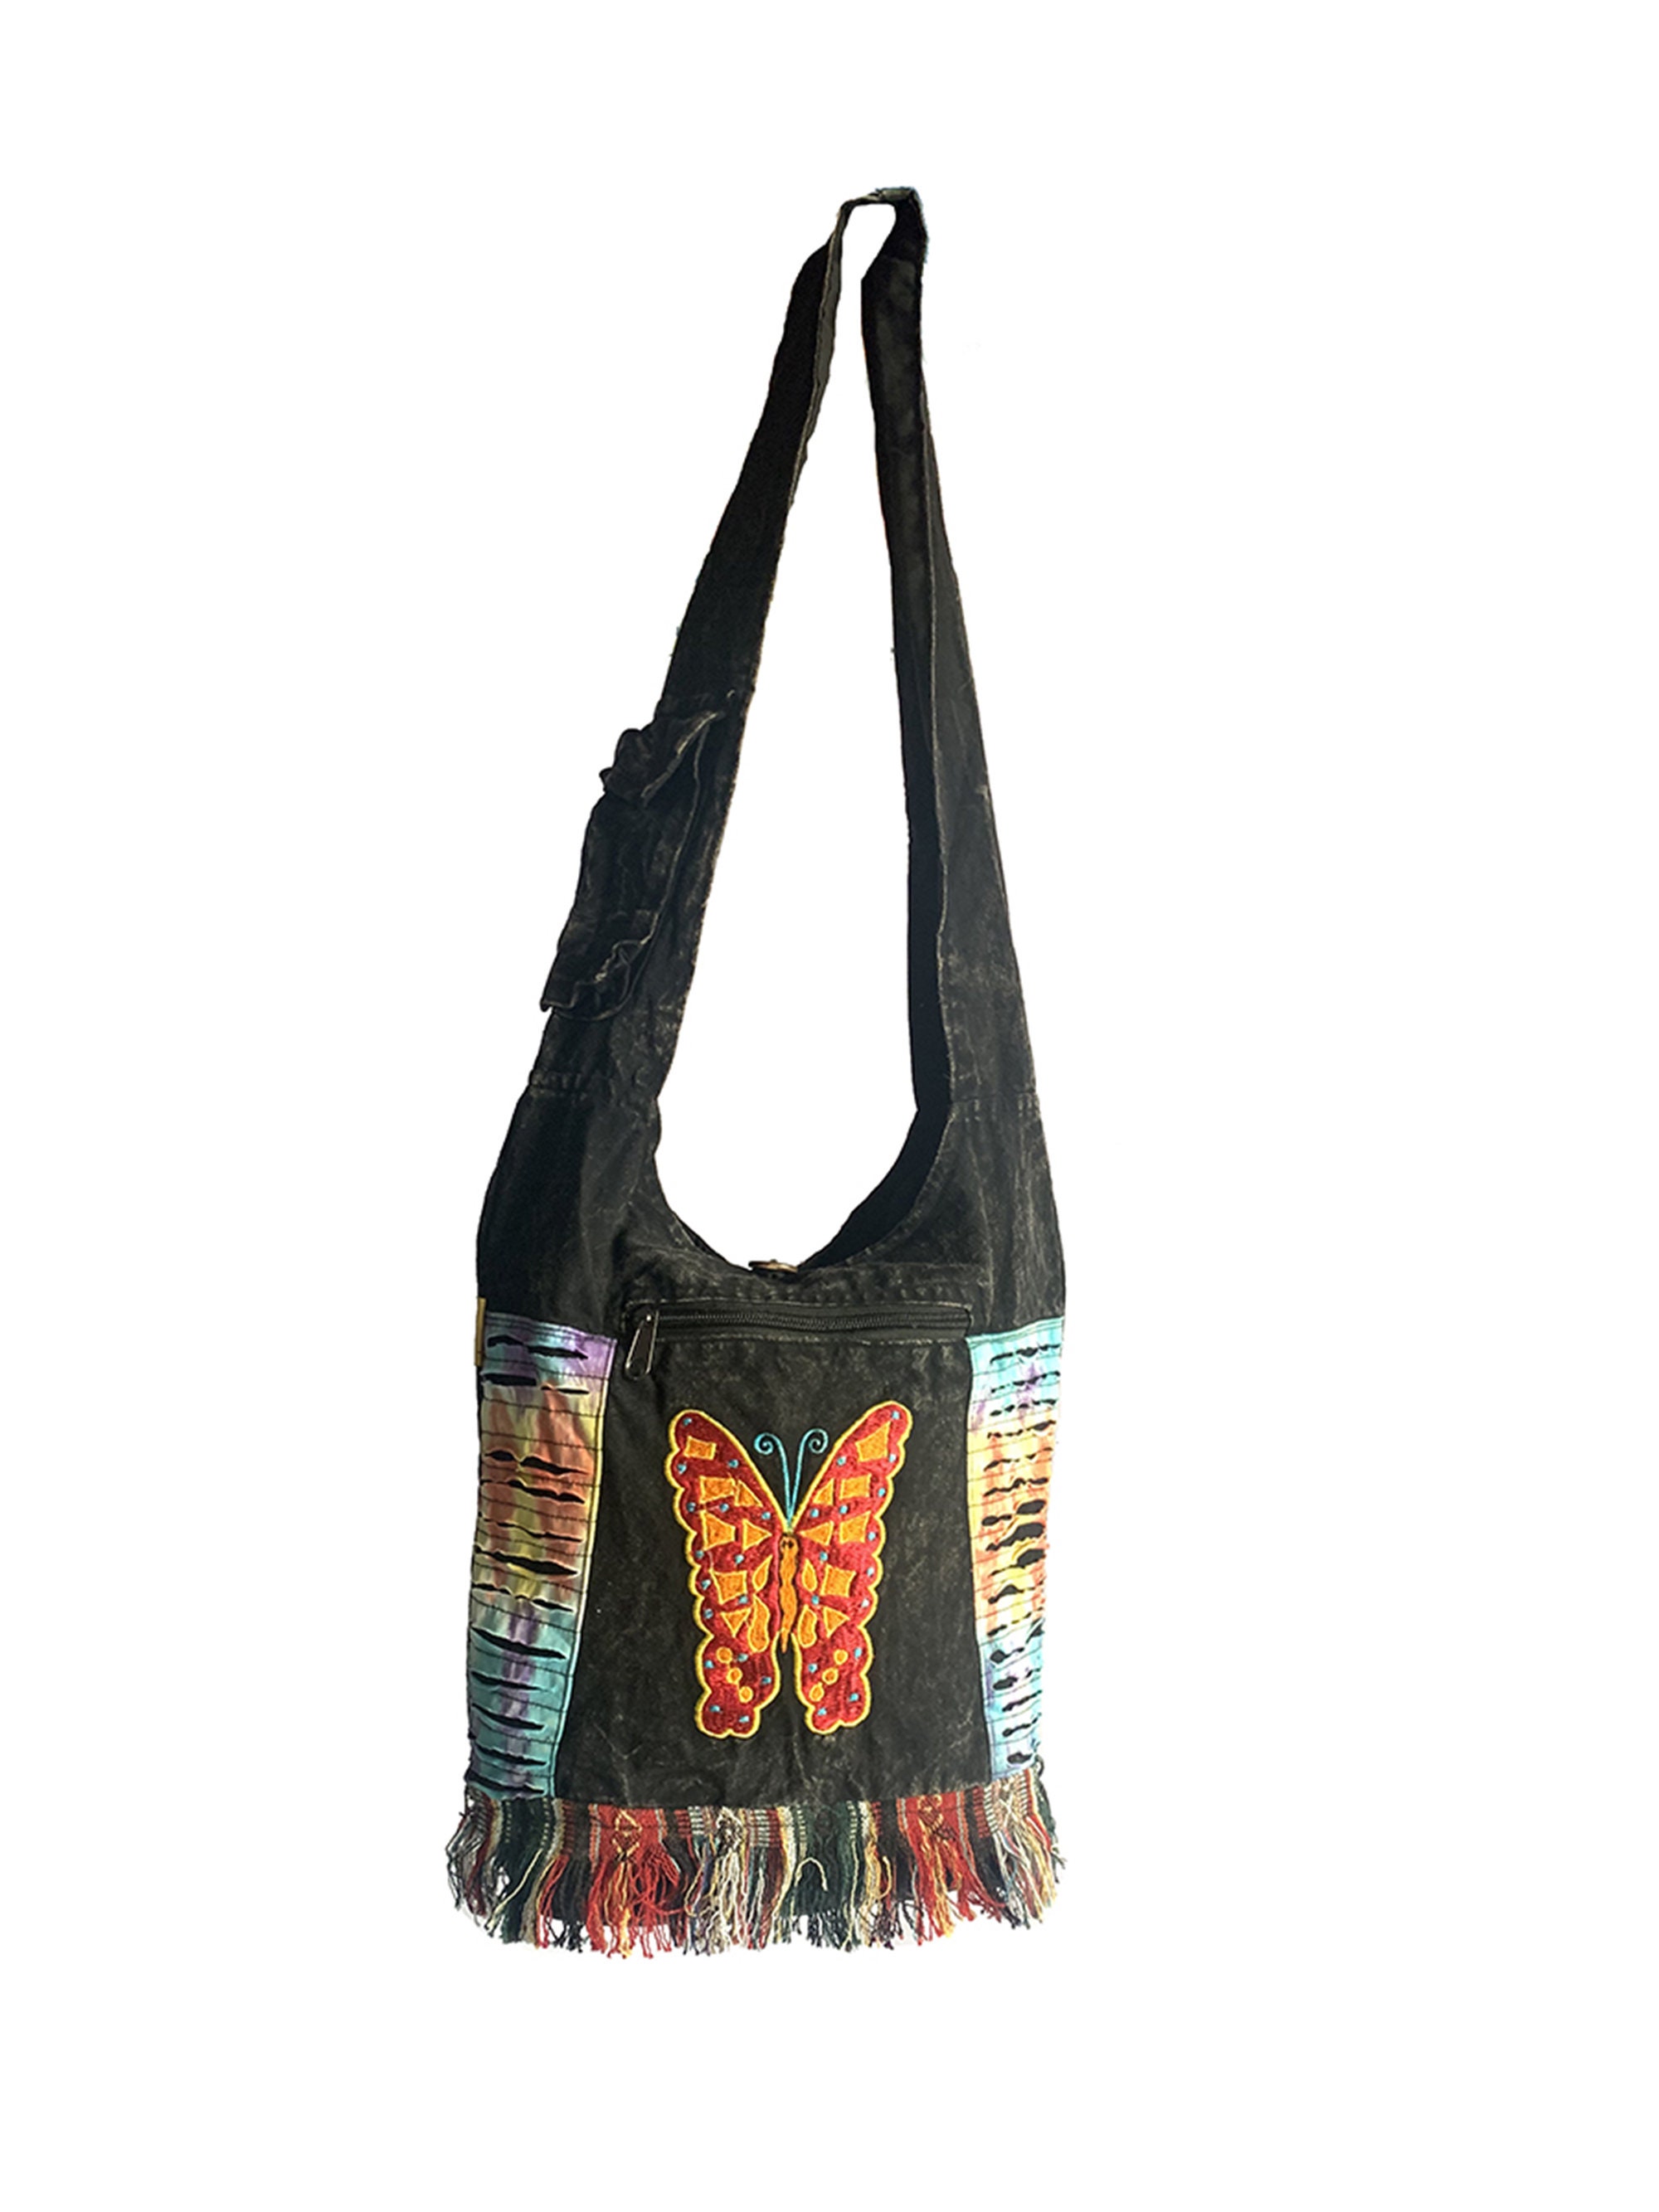 Fashion Butterfly Shoulder Messenger Bag Shipping Womens Bags Tote Handbags Hobo